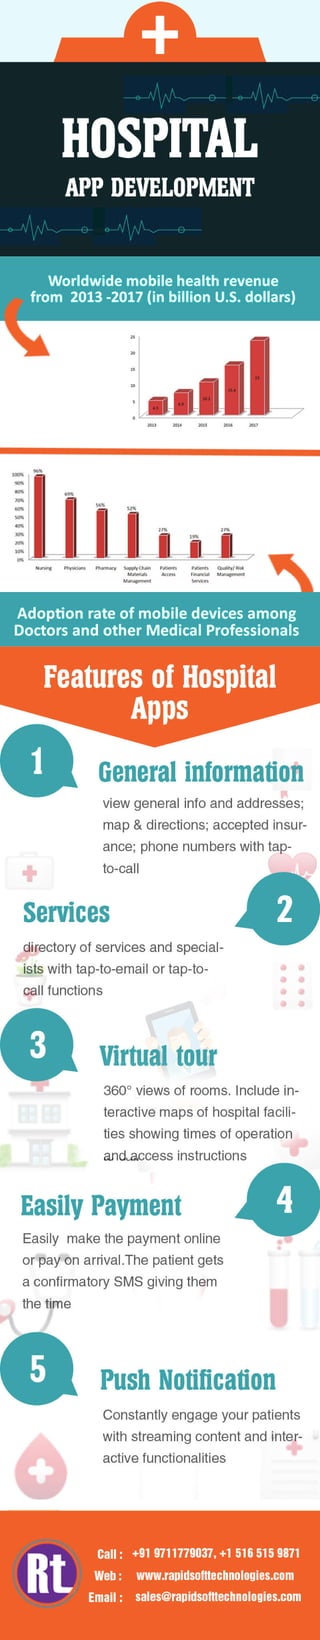 Hospital Mobile App Trends in 2017